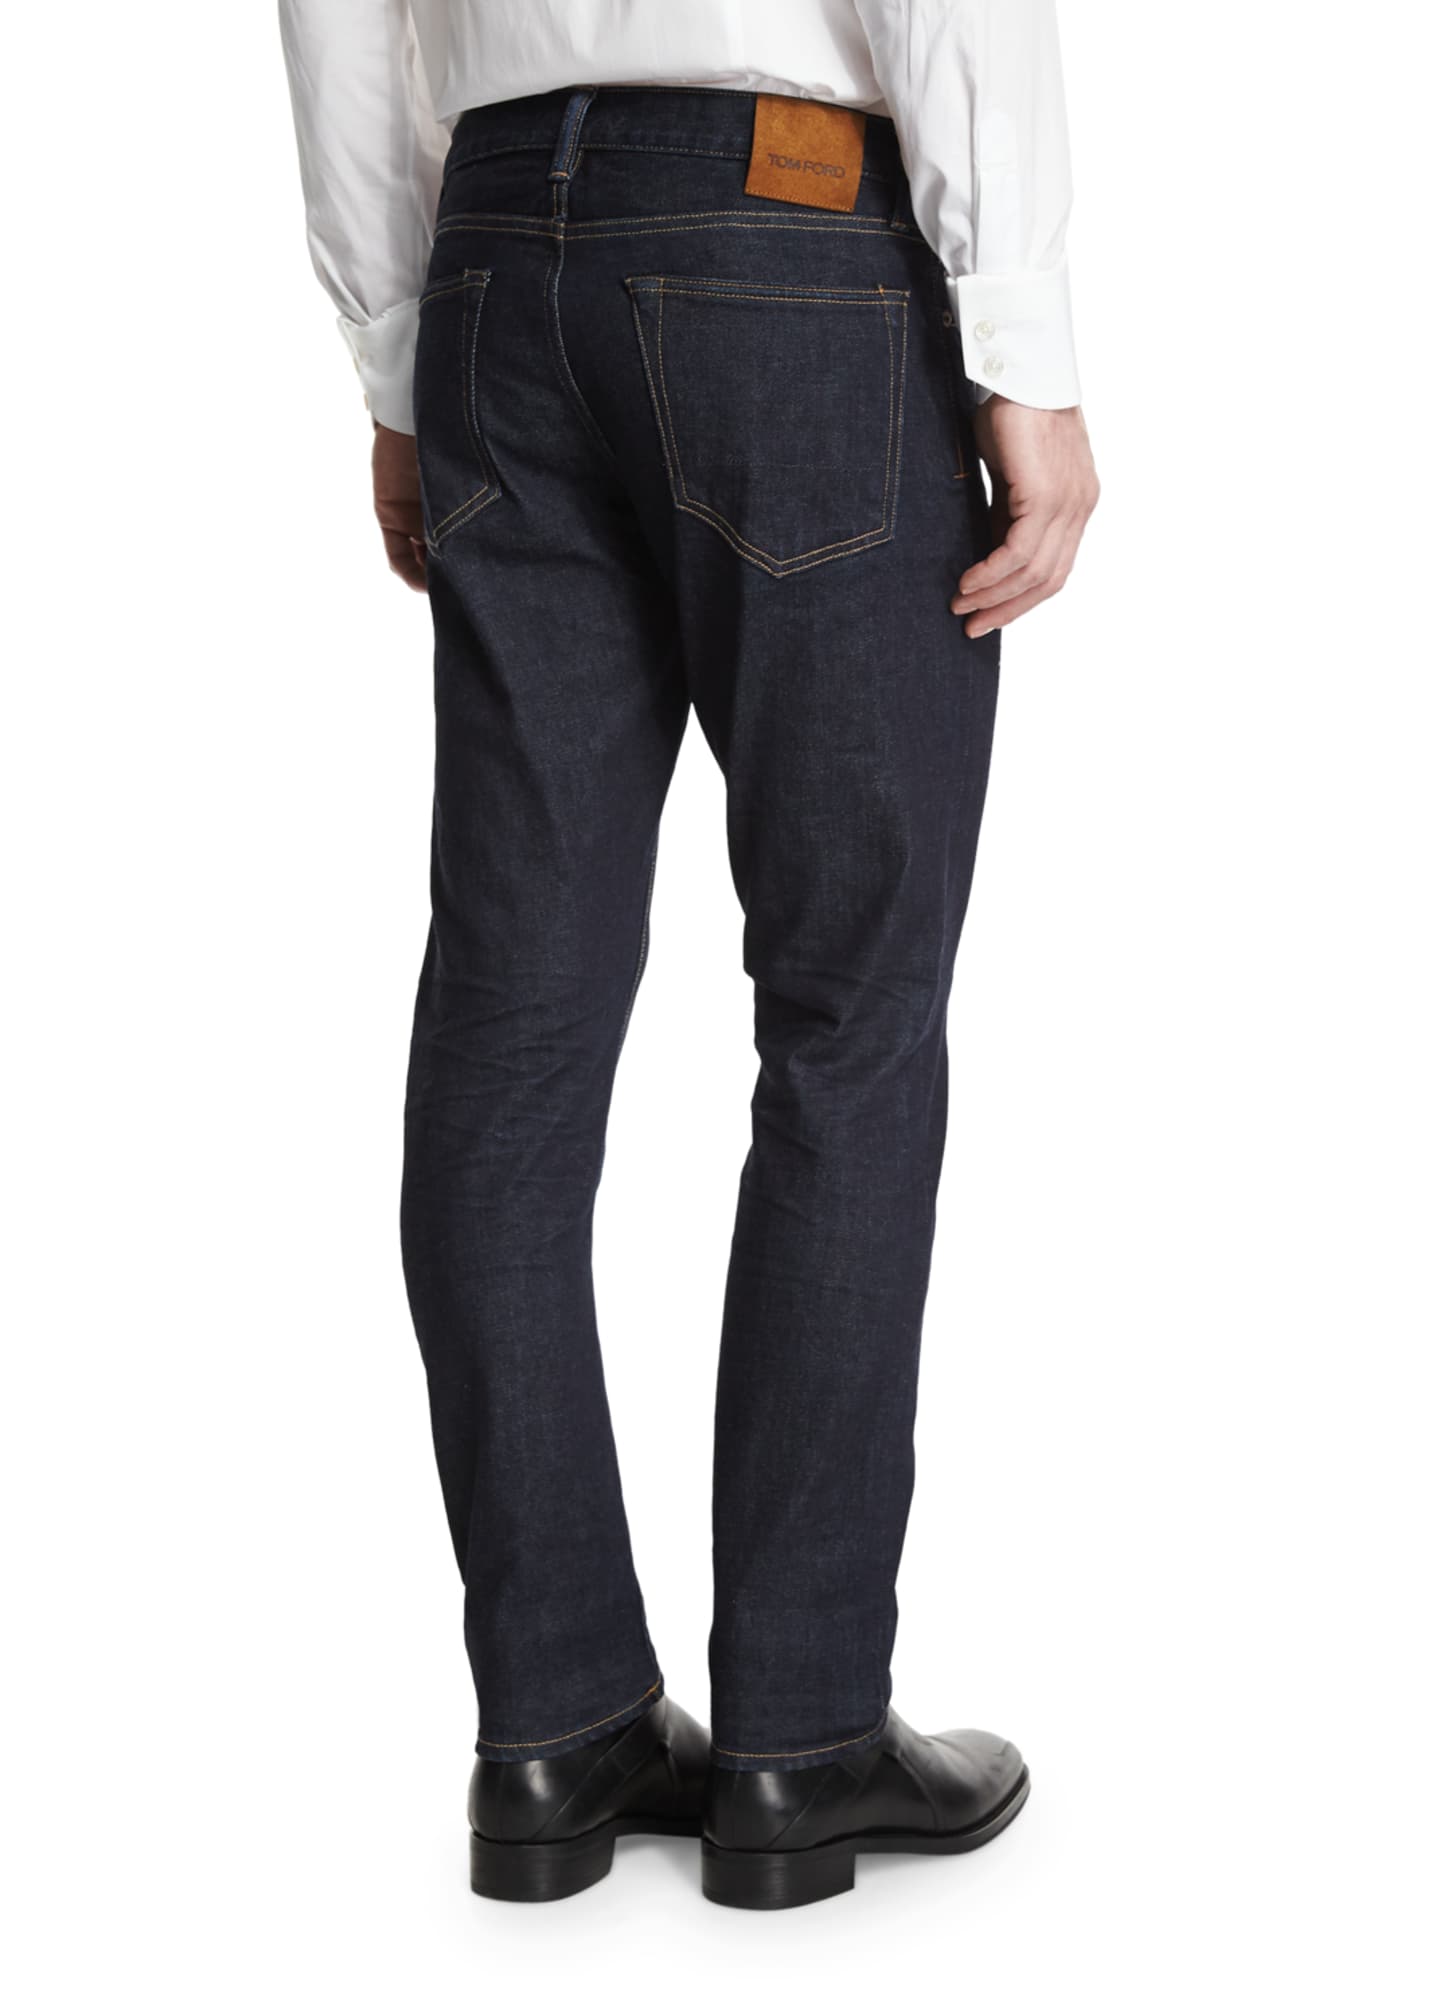 TOM FORD Slim-Fit Stretch Denim Jeans, Indigo - Bergdorf Goodman